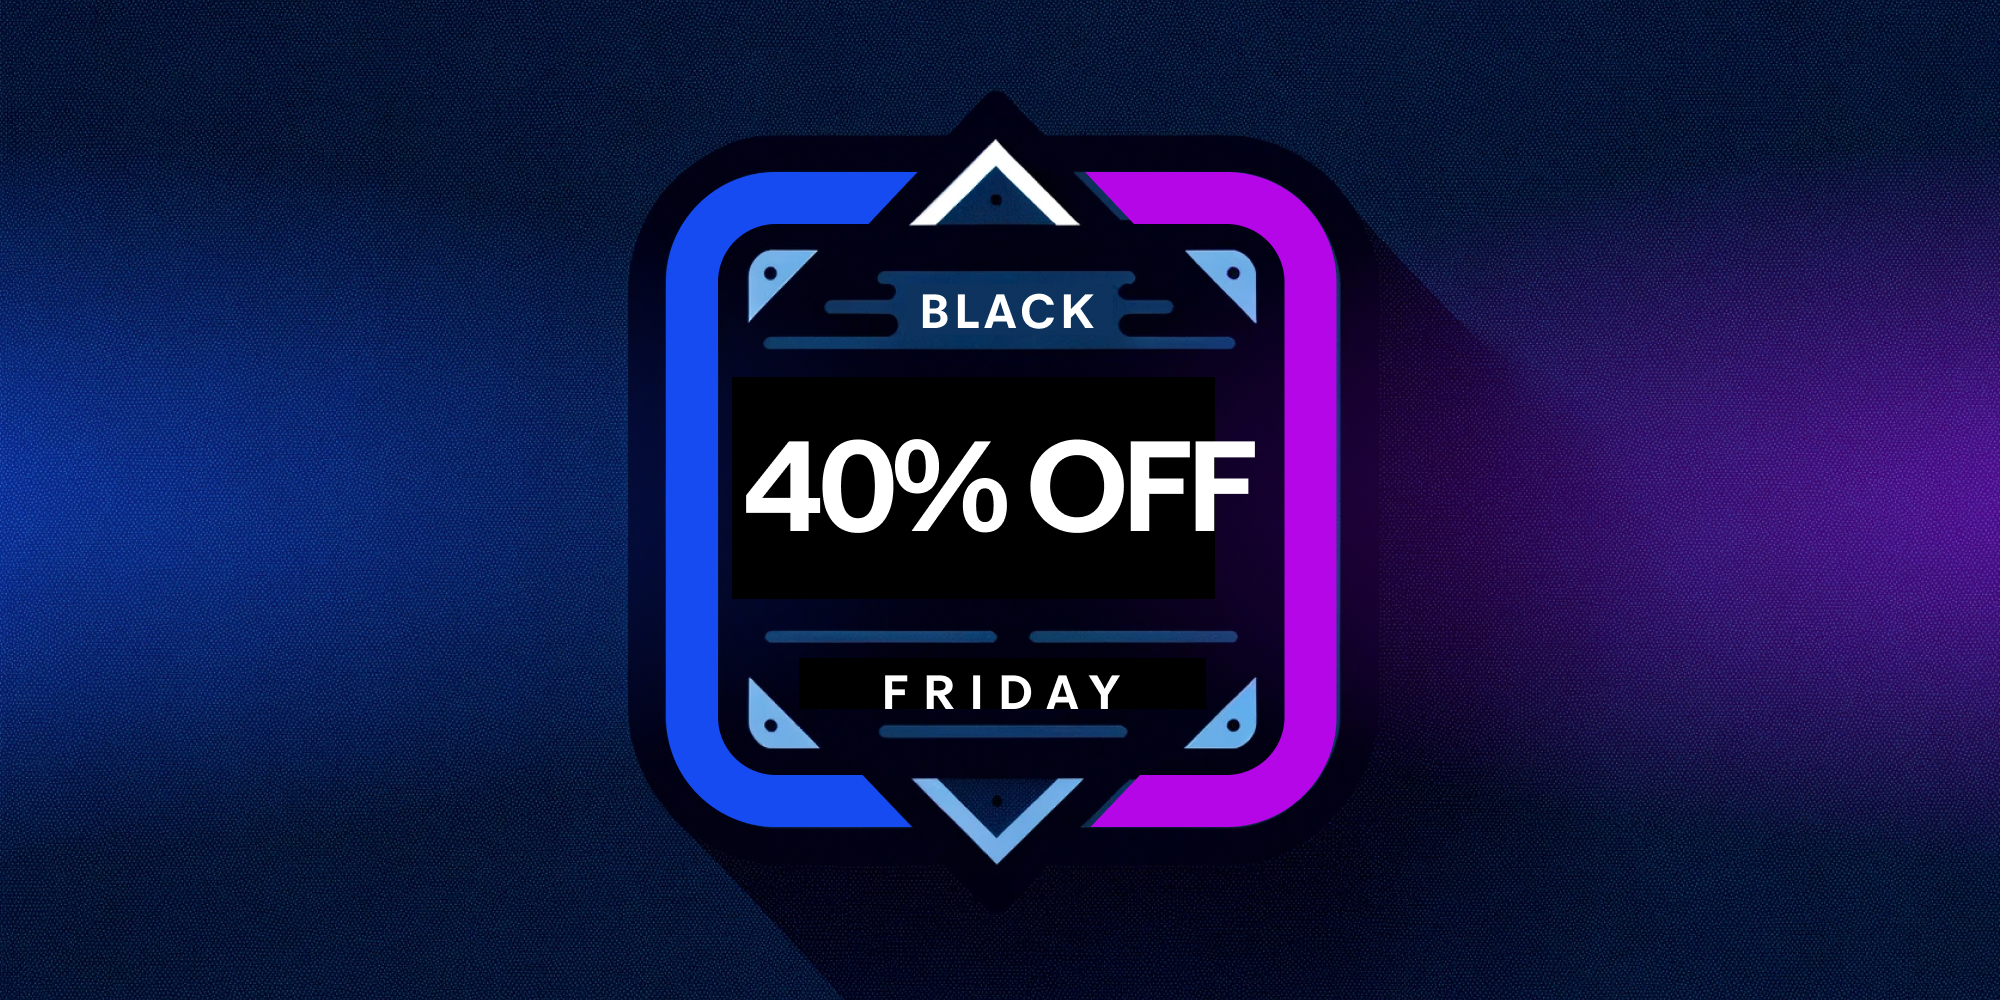 Black Friday Sale - 40% Off